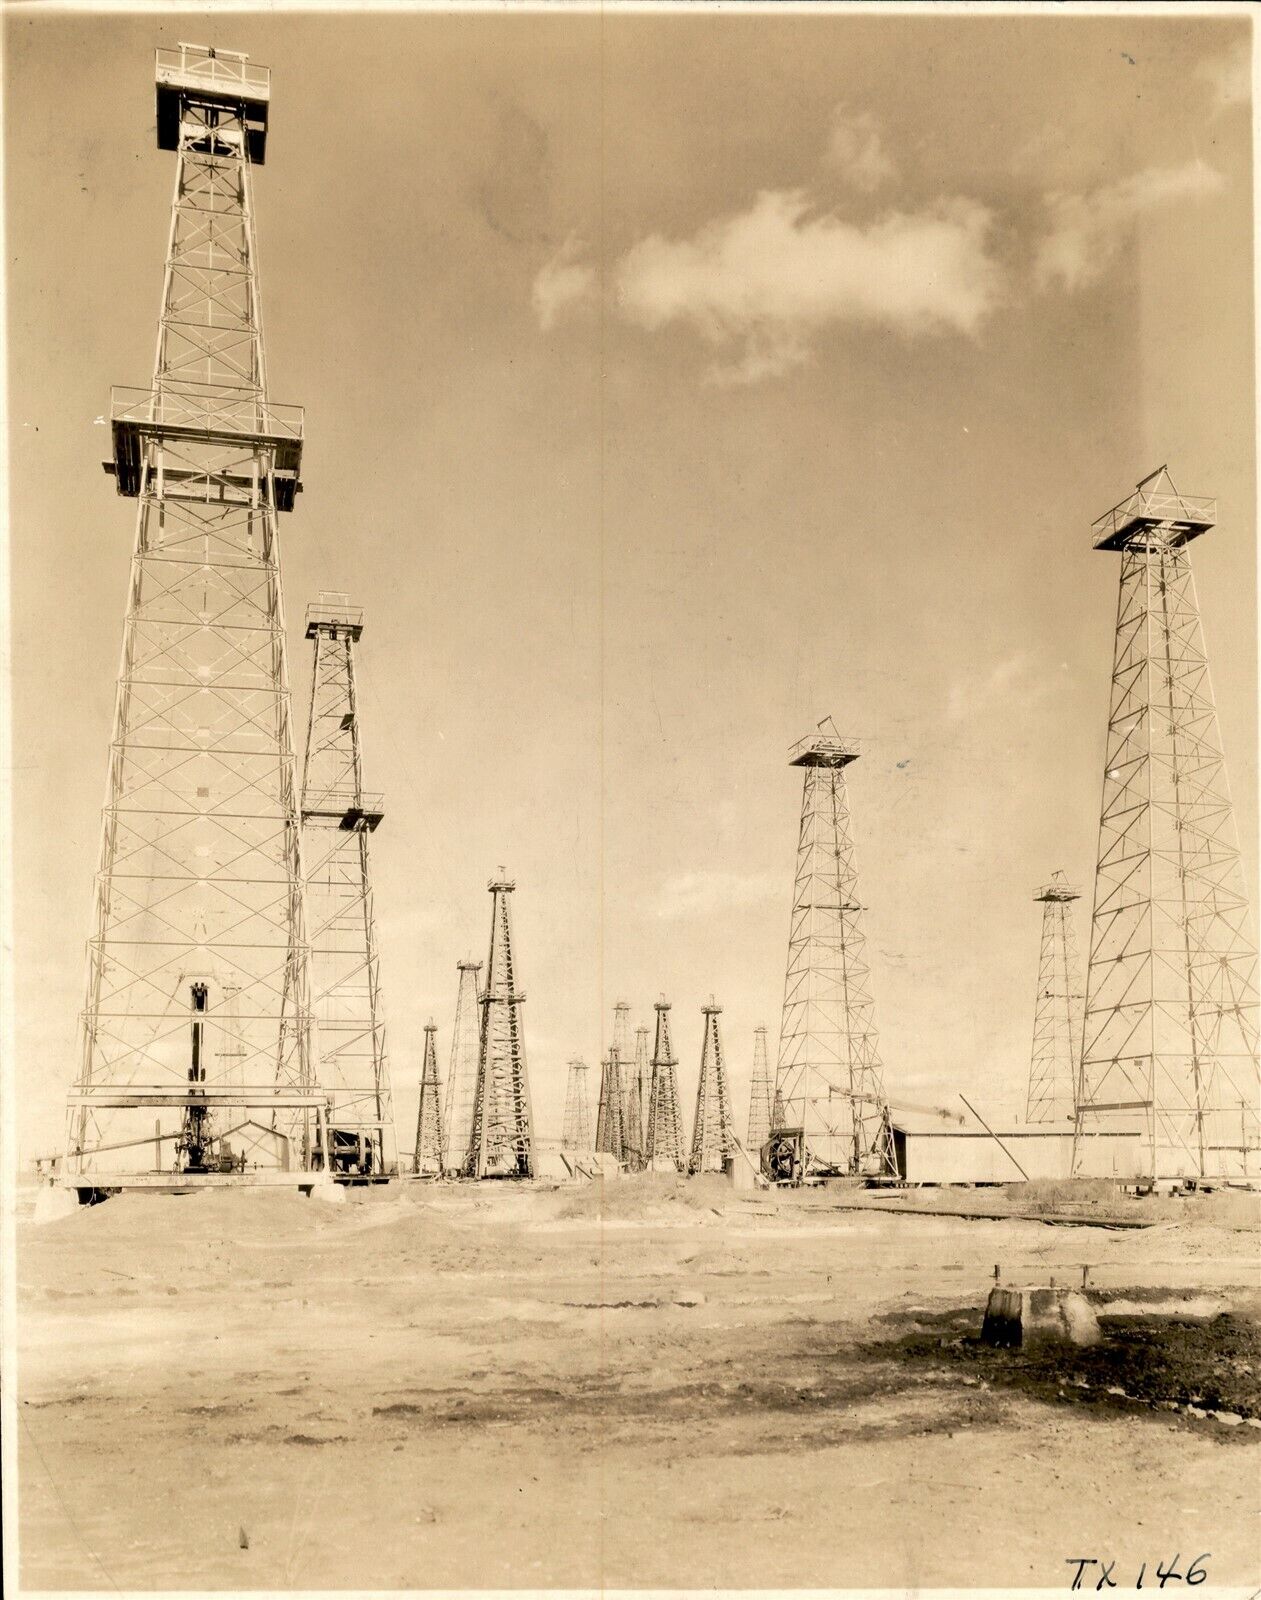 GA131 Original Underwood Photo OIL DERRICKS Fossil Fuel Drilling Industry Site